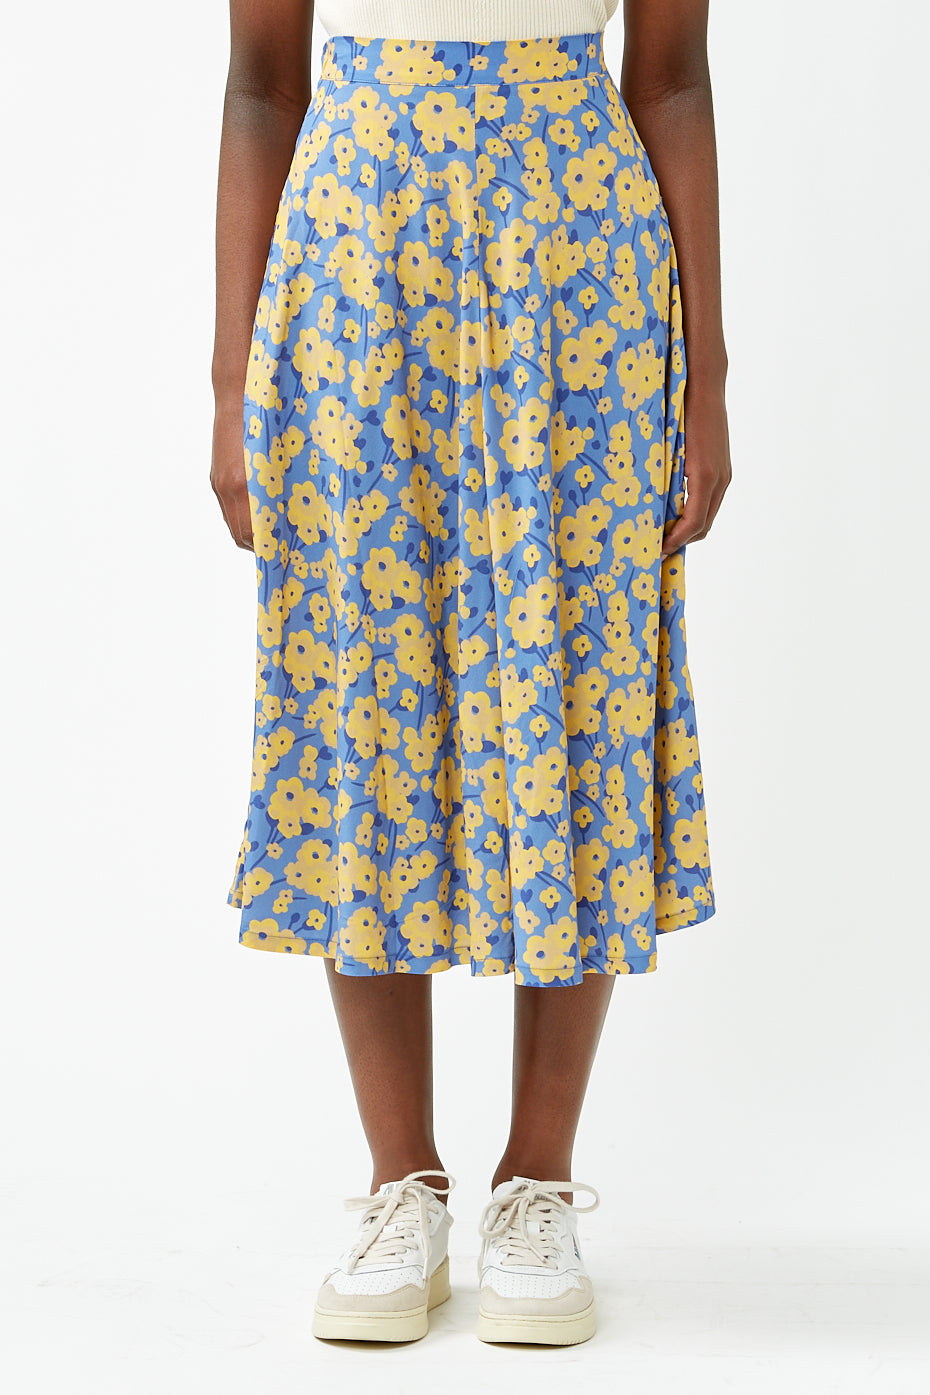 Indigo Bloom Lavanda Skirt